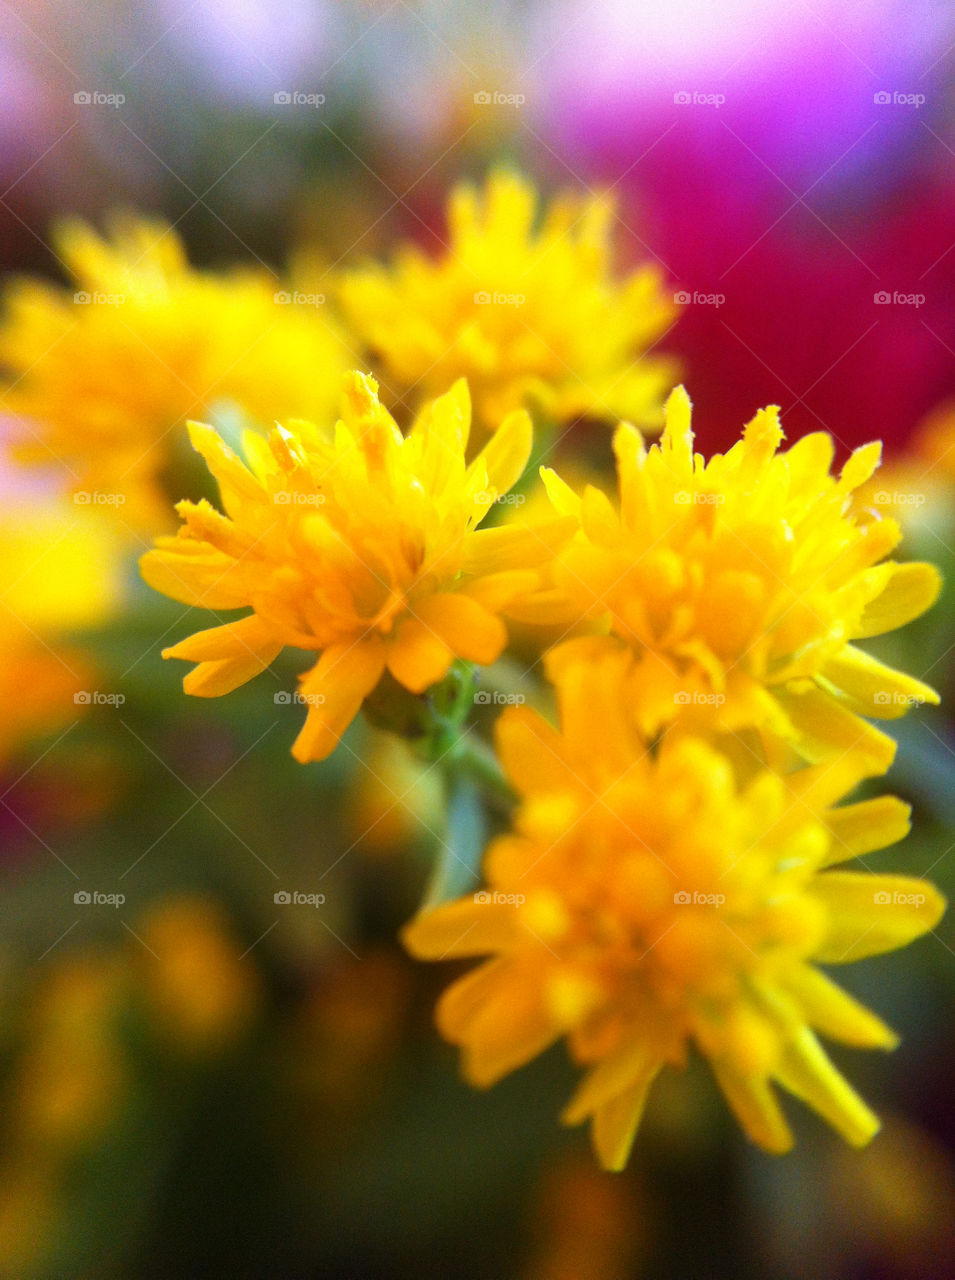 italy yellow flower macro by smandarina